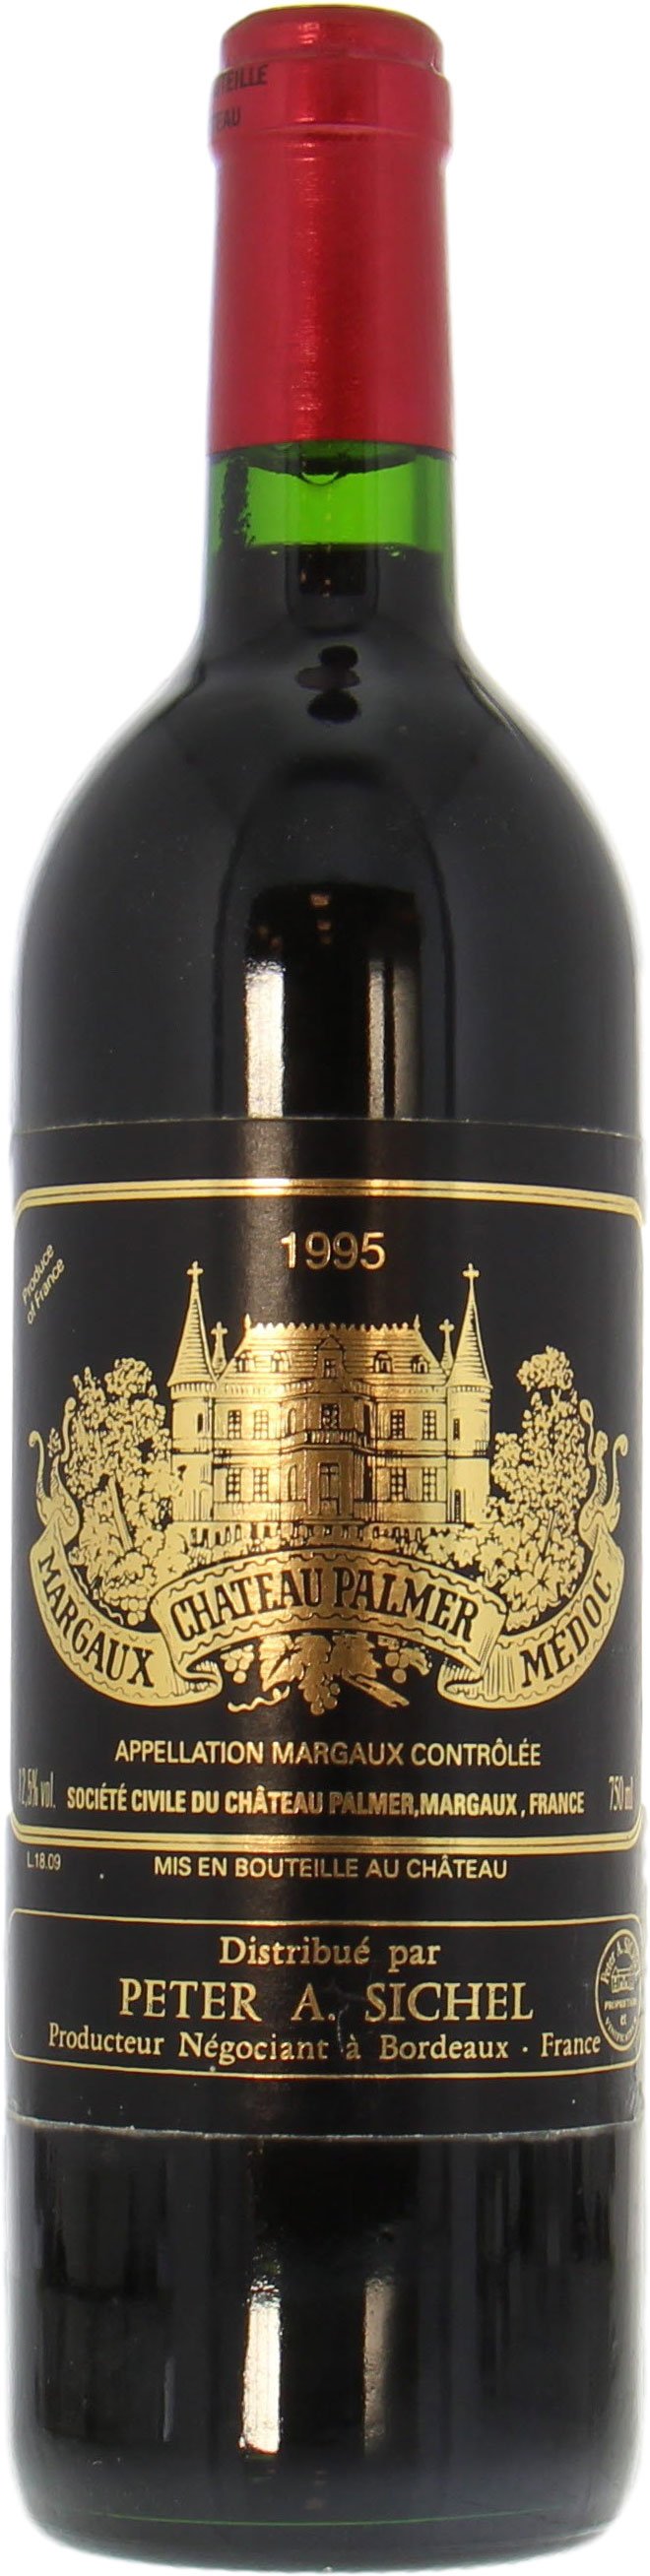 Chateau Palmer - Chateau Palmer 1995